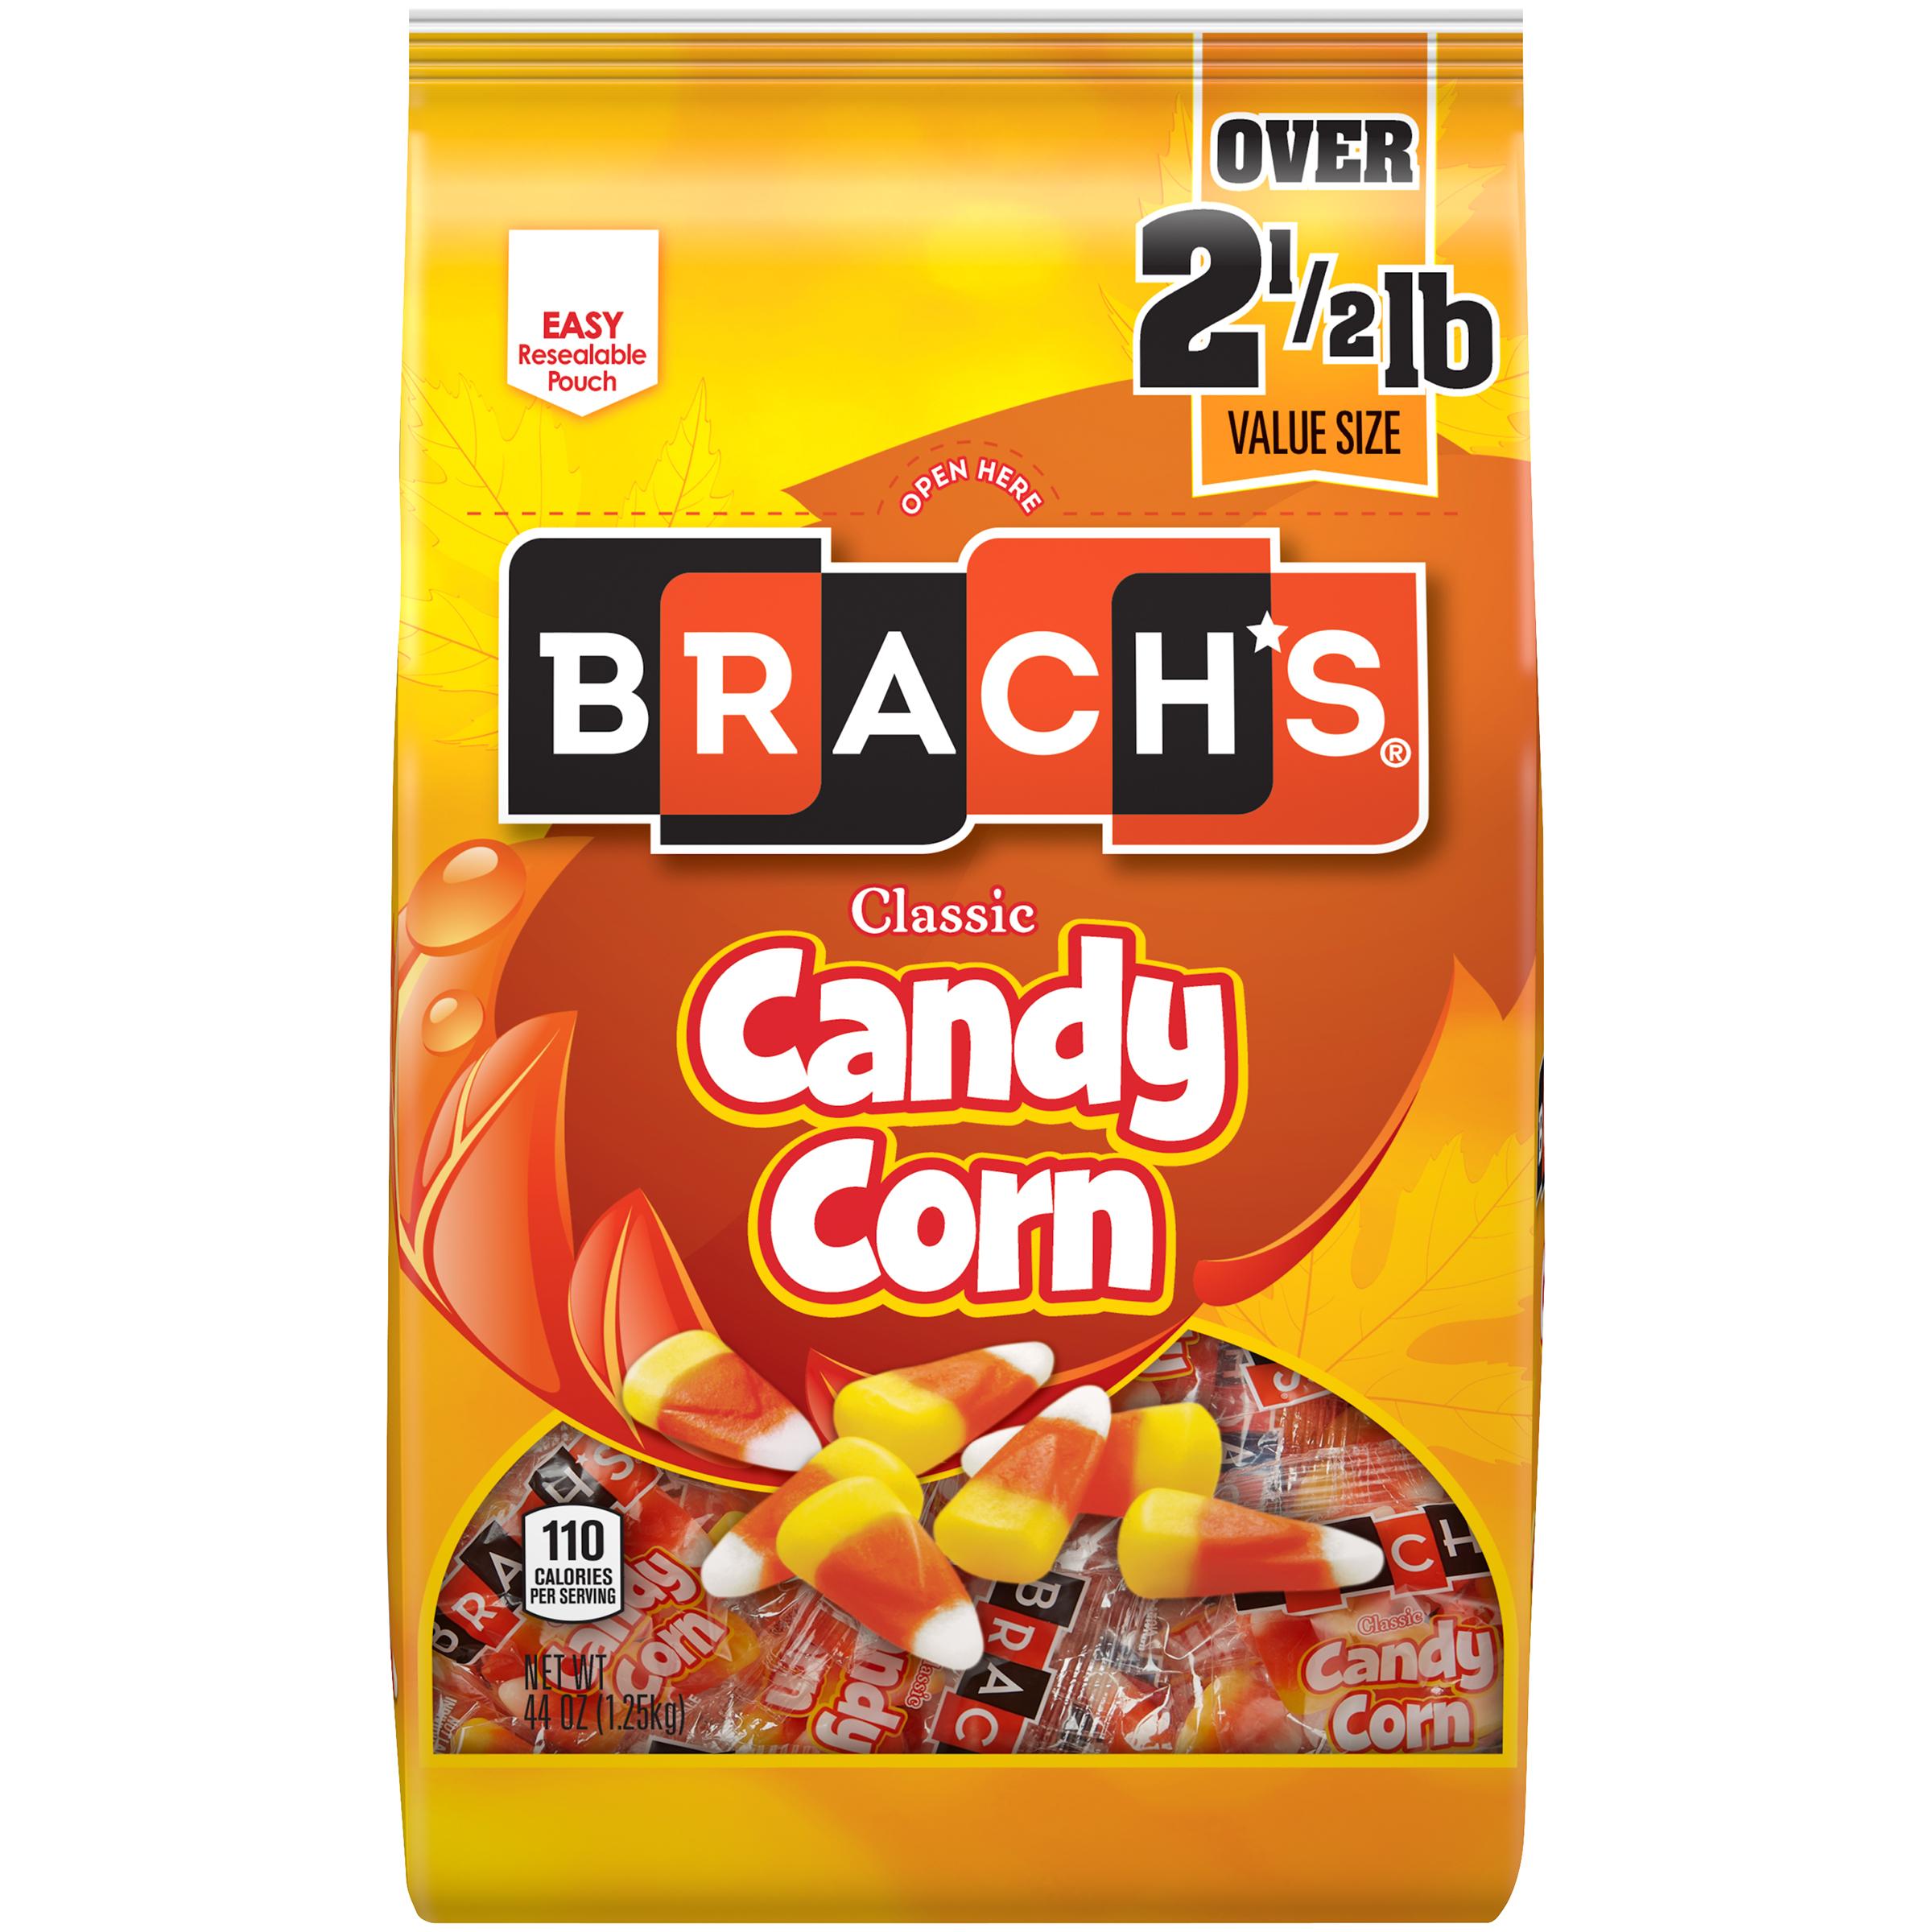 44oz Brachs Halloween Classic Candy Corn Bag for $1.24